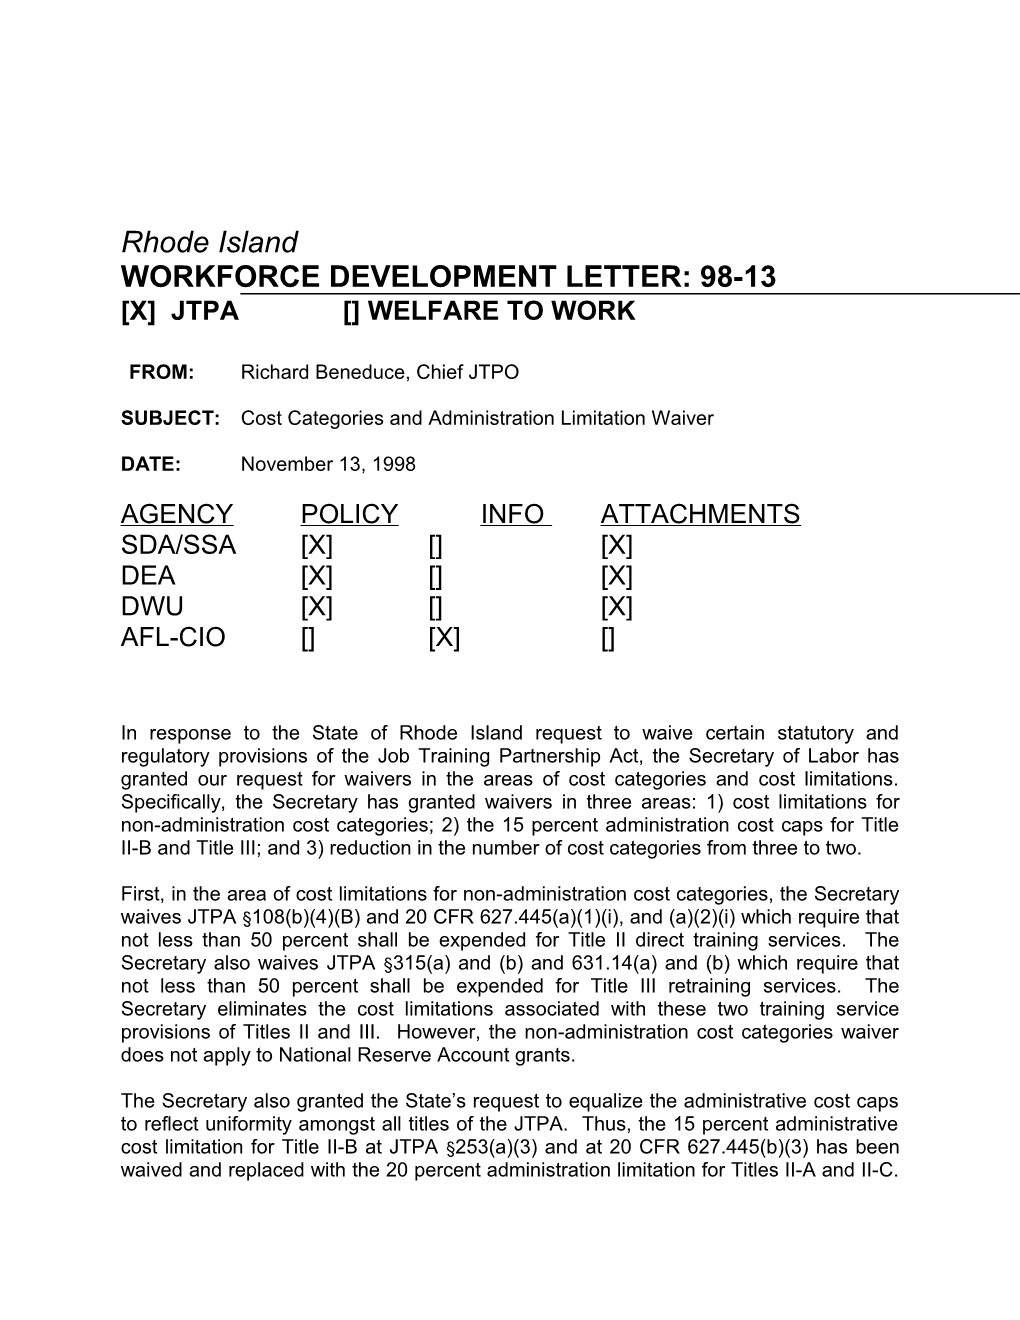 Workforce Development Letter: 98-13